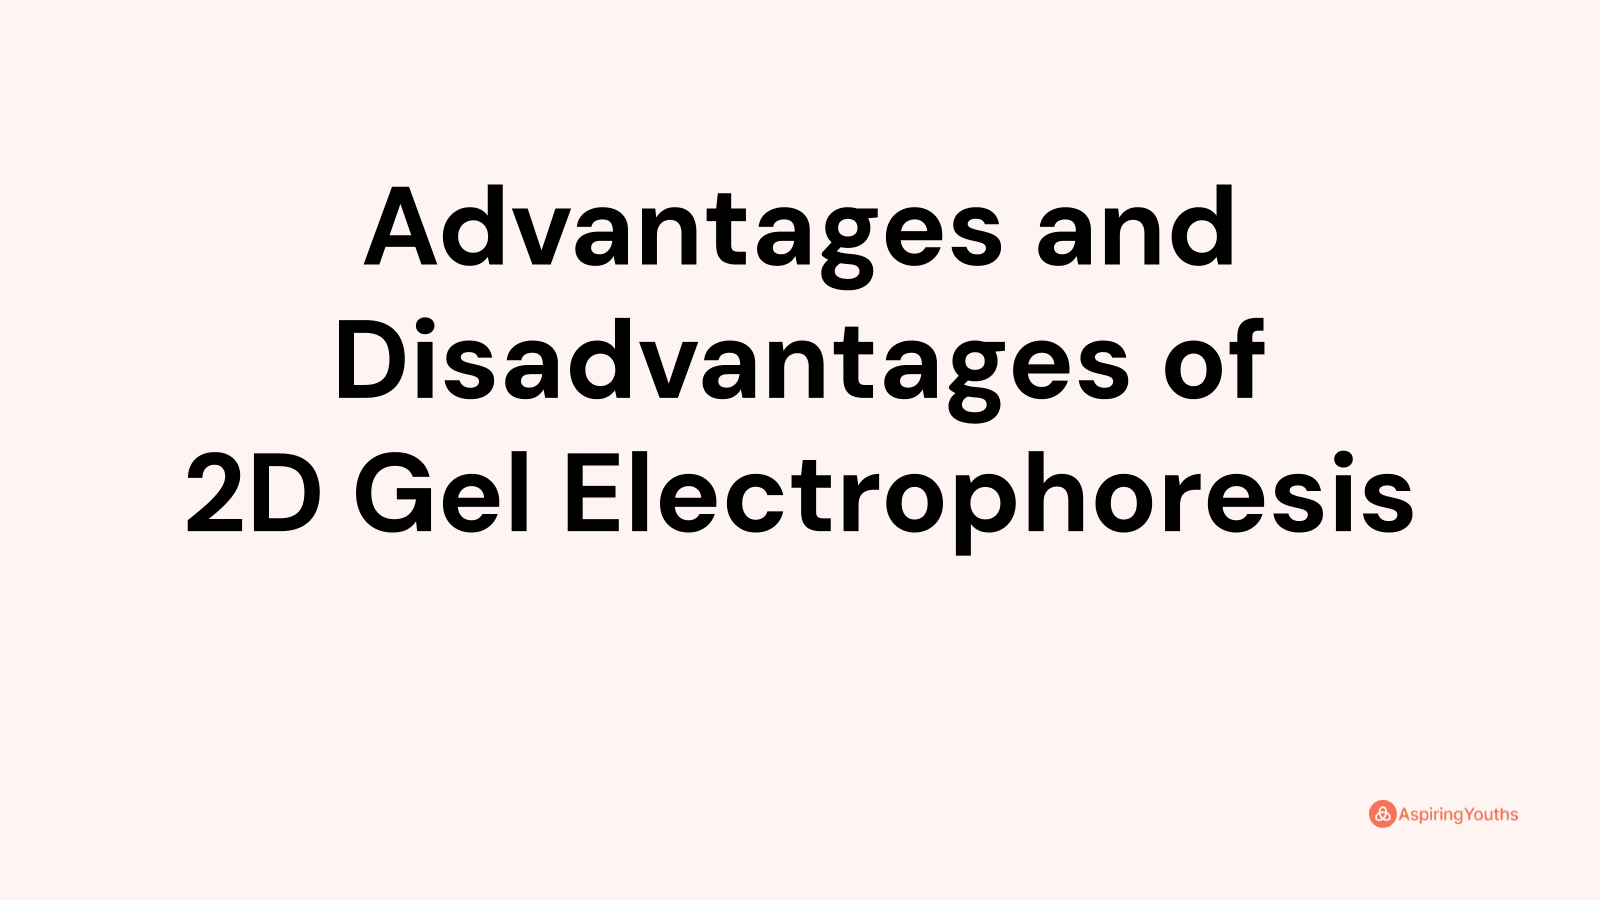 Advantages and disadvantages of 2D Gel Electrophoresis